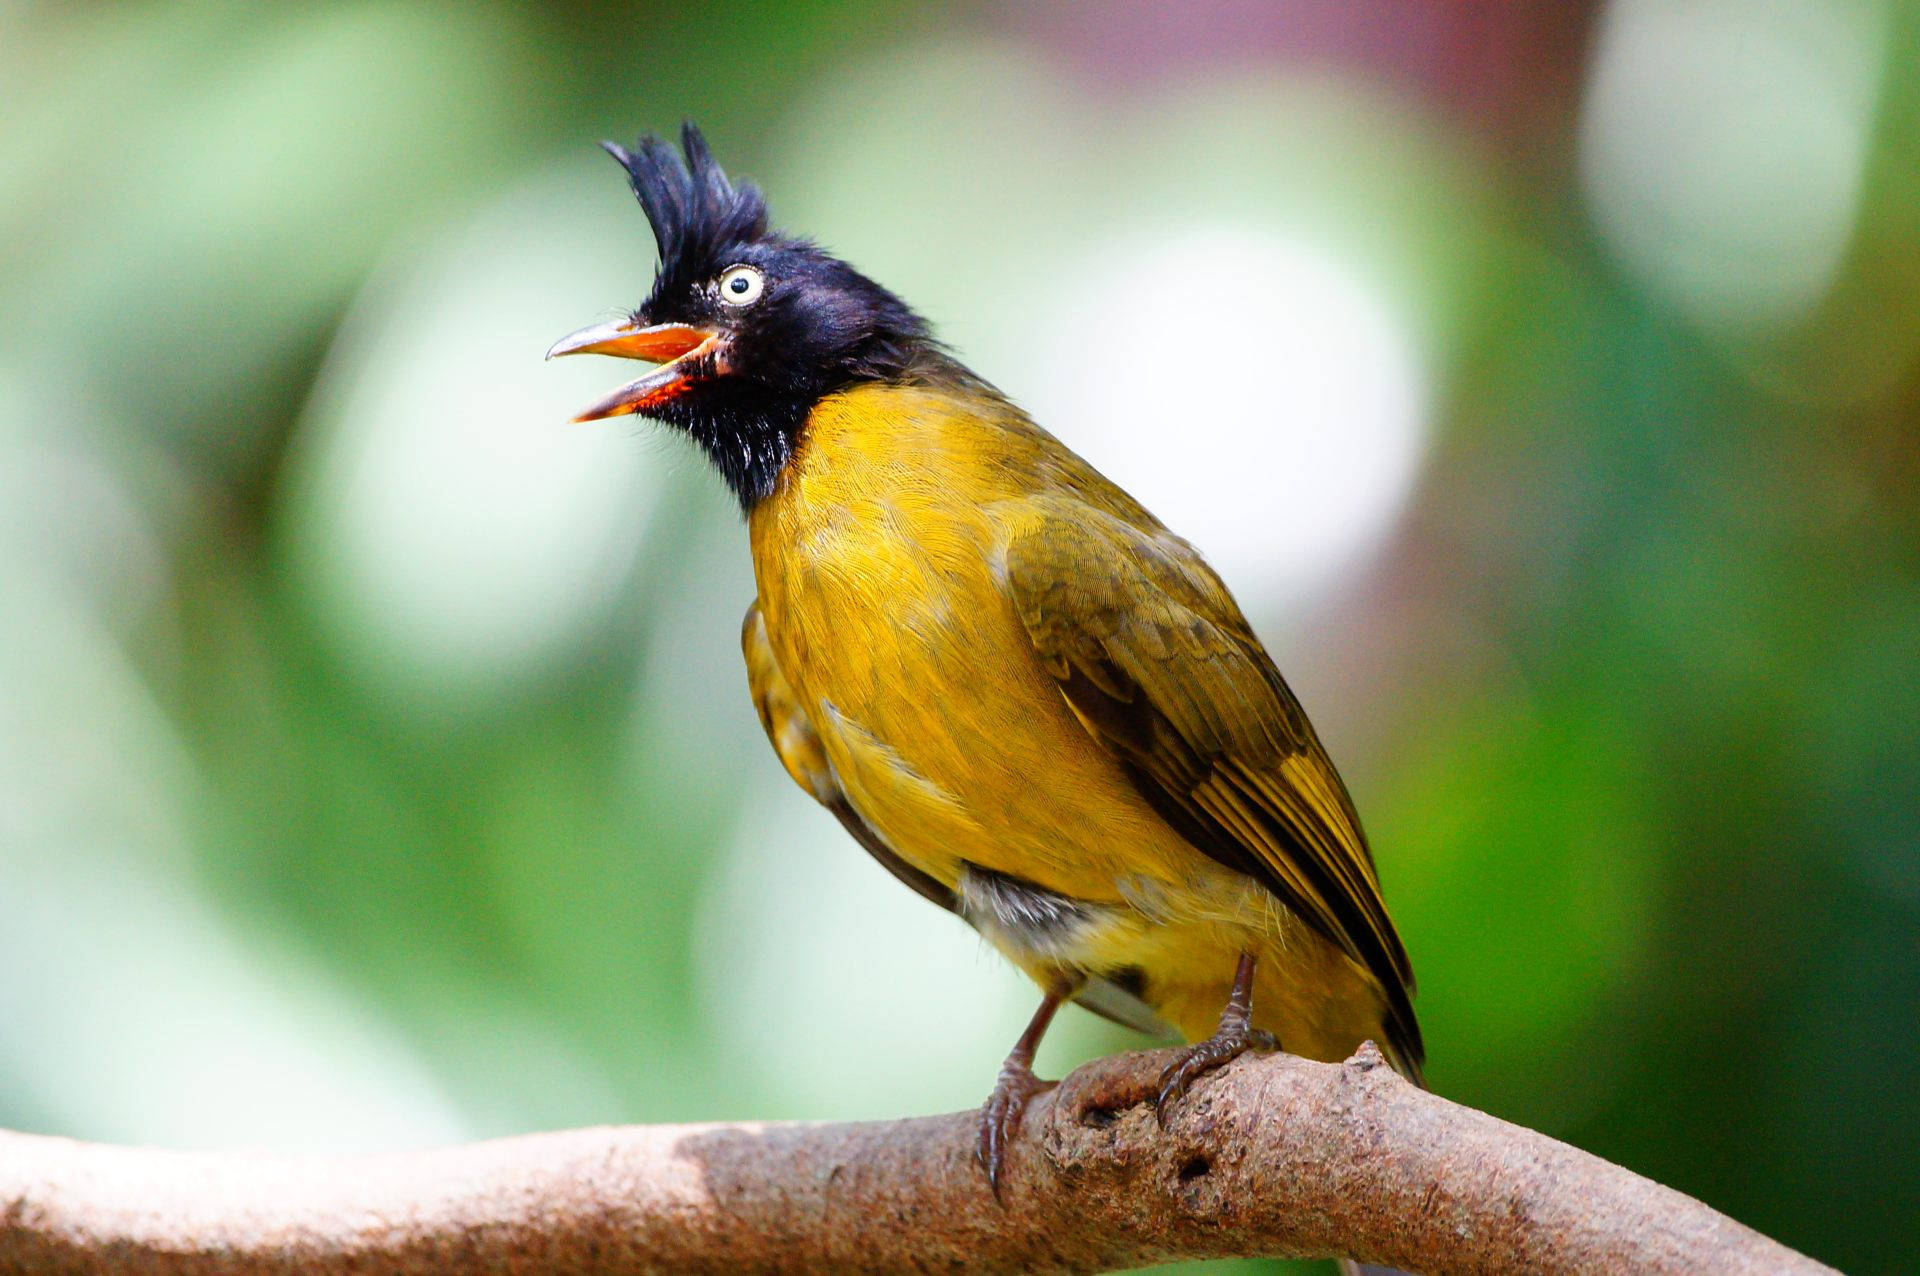 Caption: Vibrant Yellow Bird With Black Crest Background